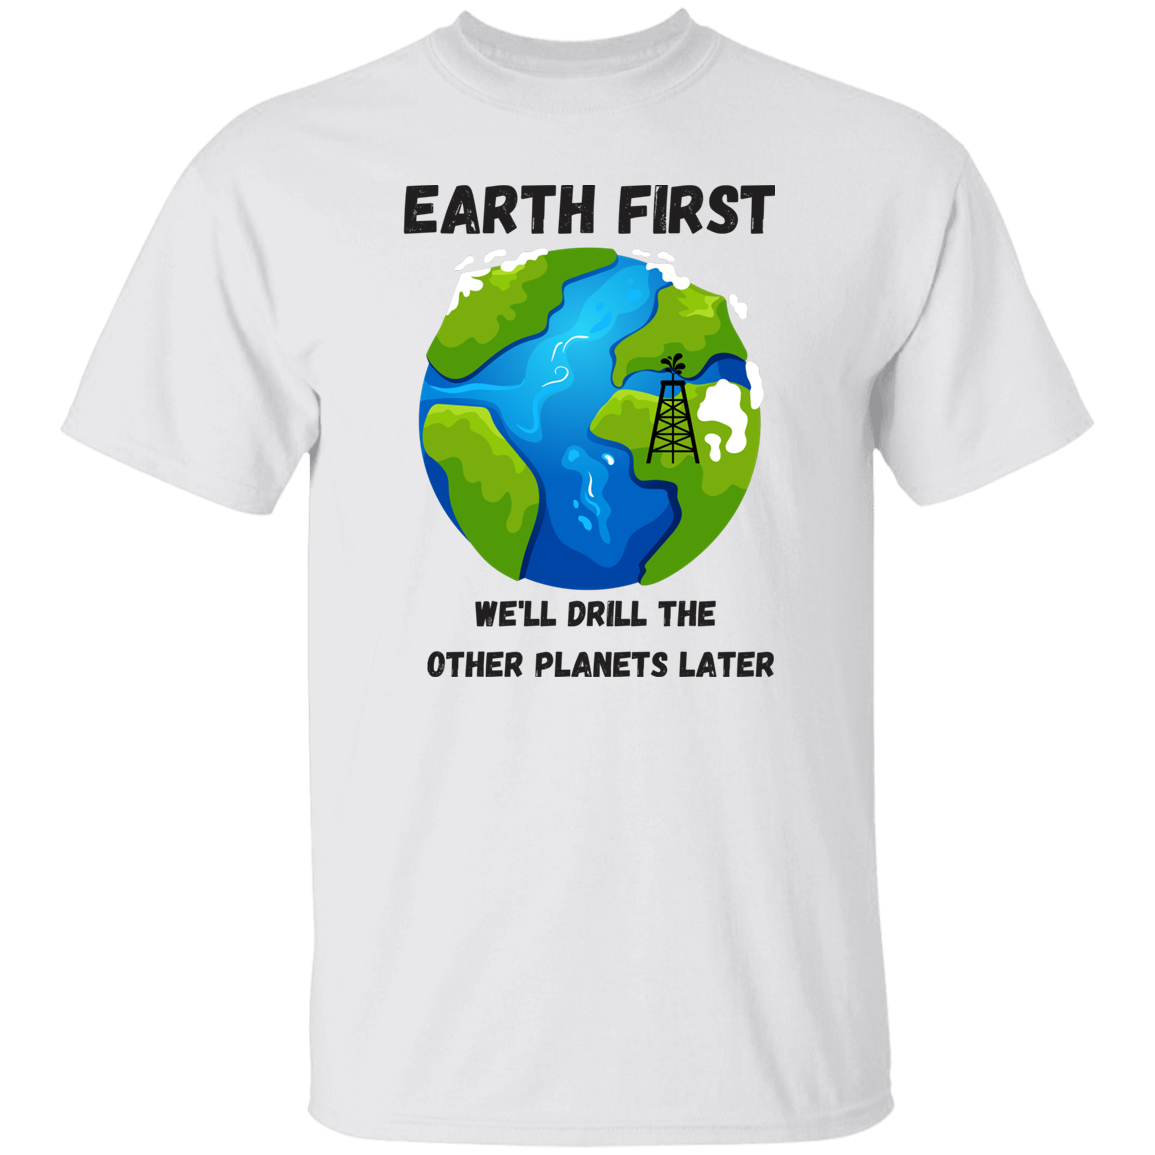 Earth First T-Shirt, blk